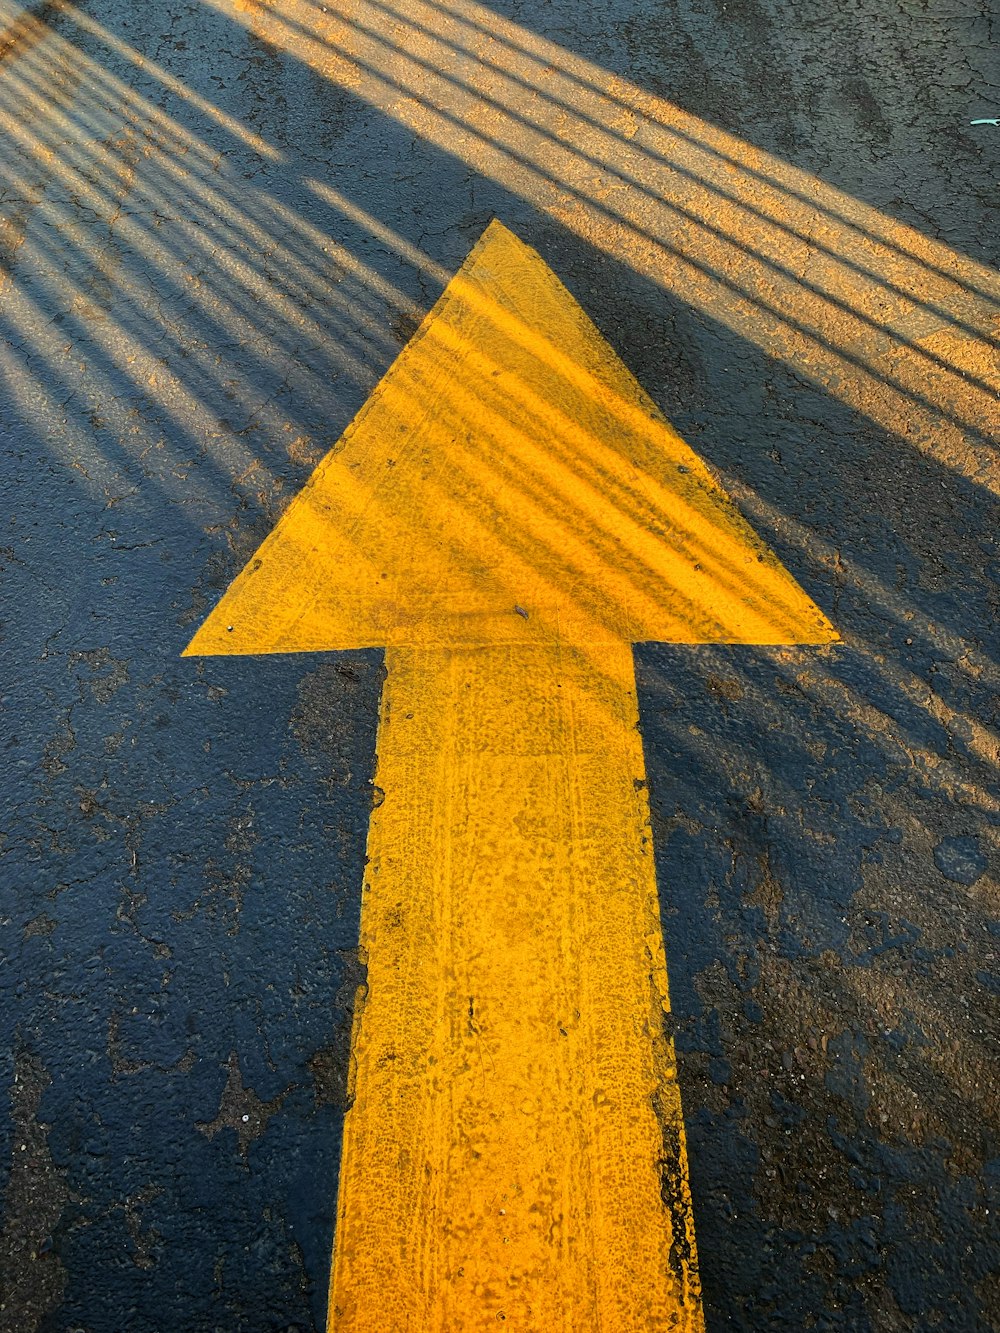 yellow arrow sign on gray concrete road